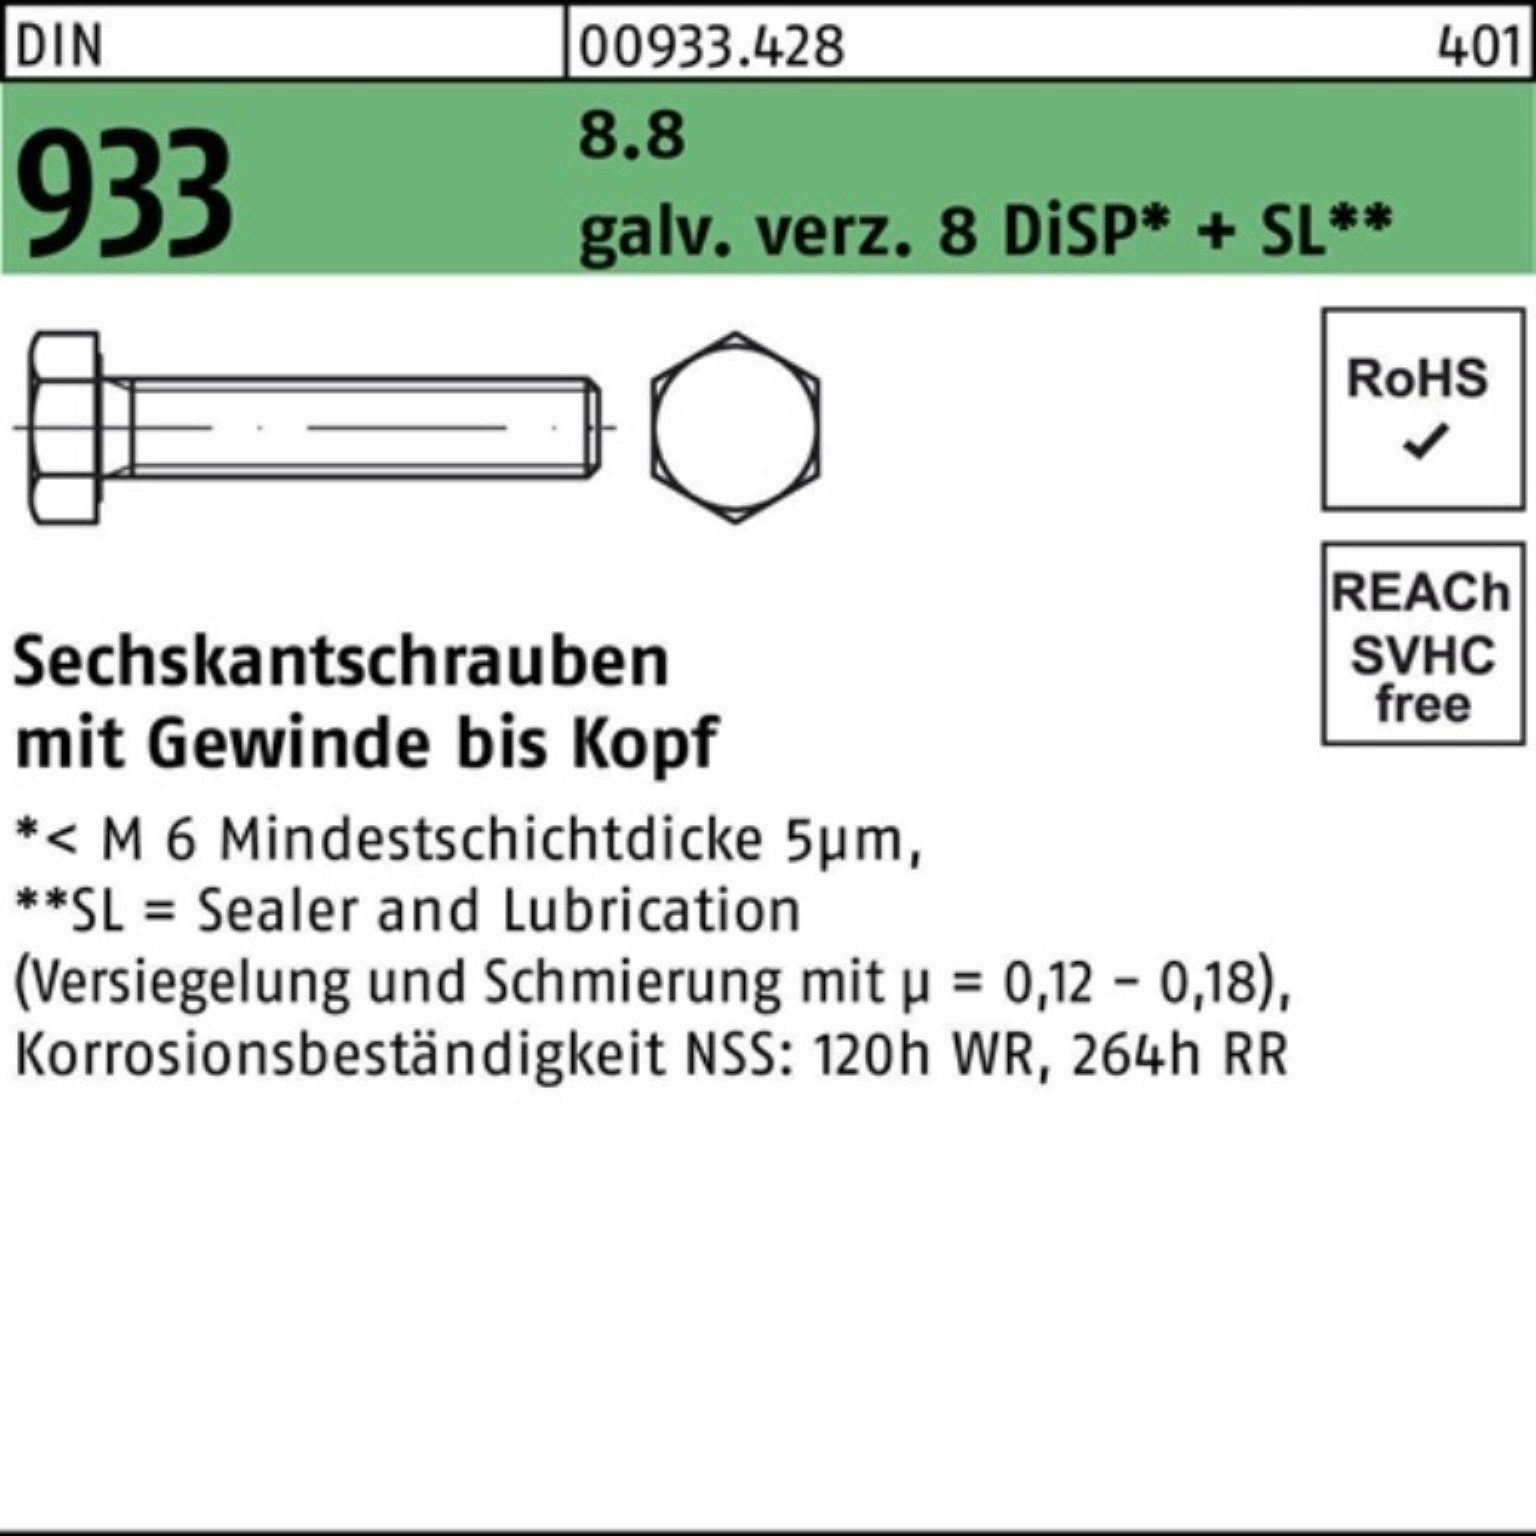 DIN gal M20x DiSP Reyher Sechskantschraube Zn S 8 Pack VG 8.8 100er 933 Sechskantschraube + 120